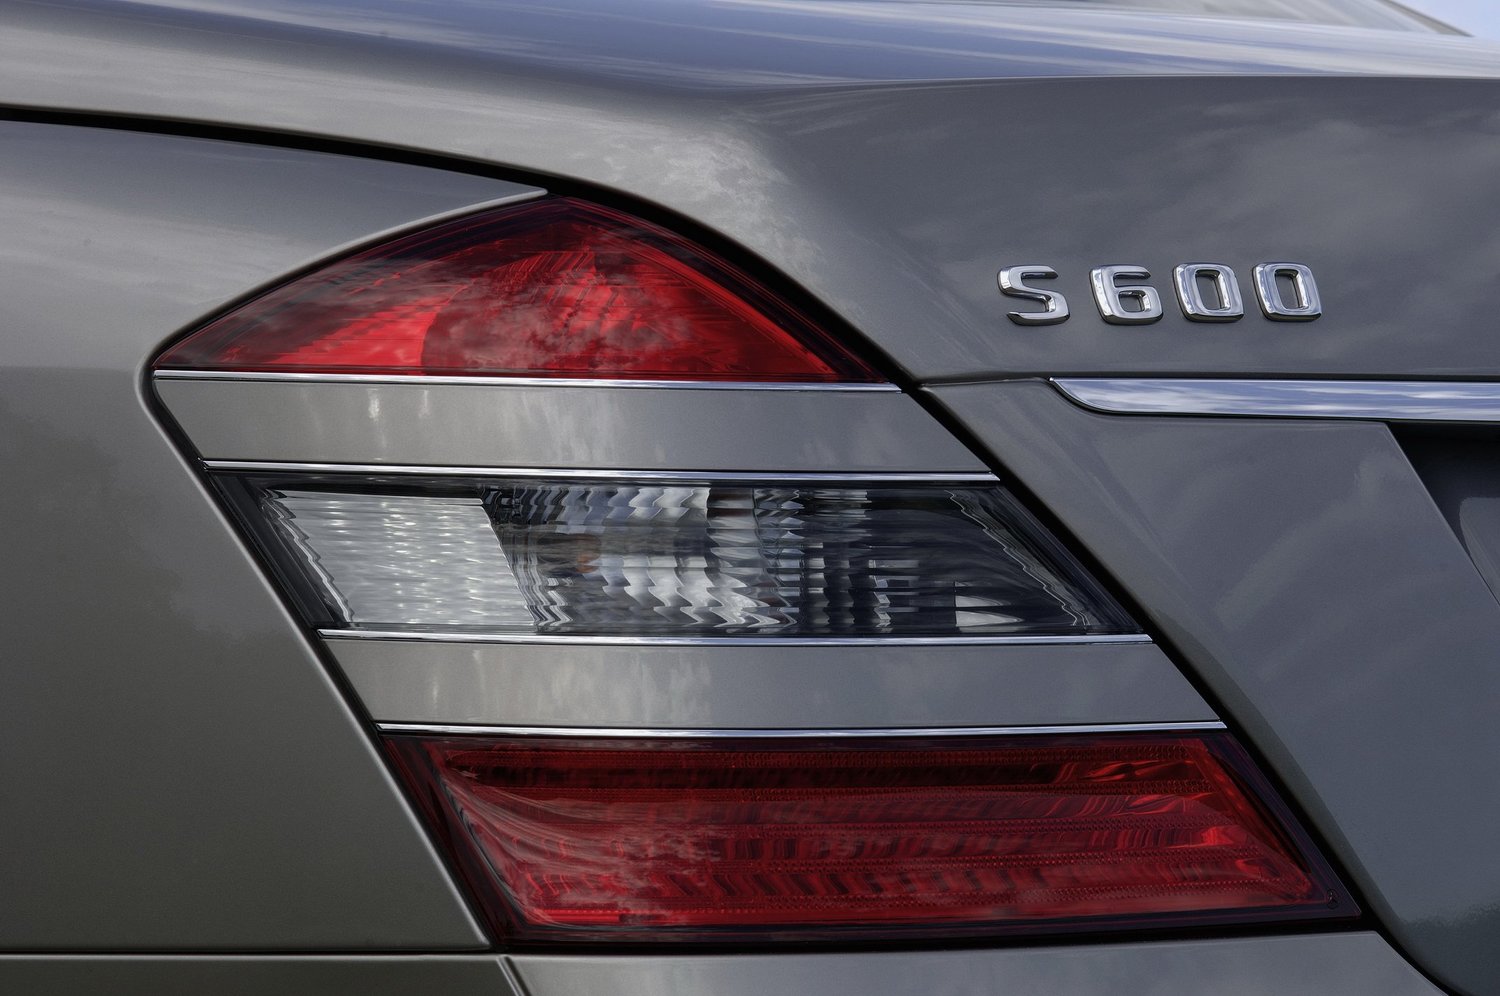 седан Long Mercedes-Benz S-klasse 2005 - 2009г выпуска модификация S 500 4MATIC Long 5.5 AT (388 л.с.) 4×4